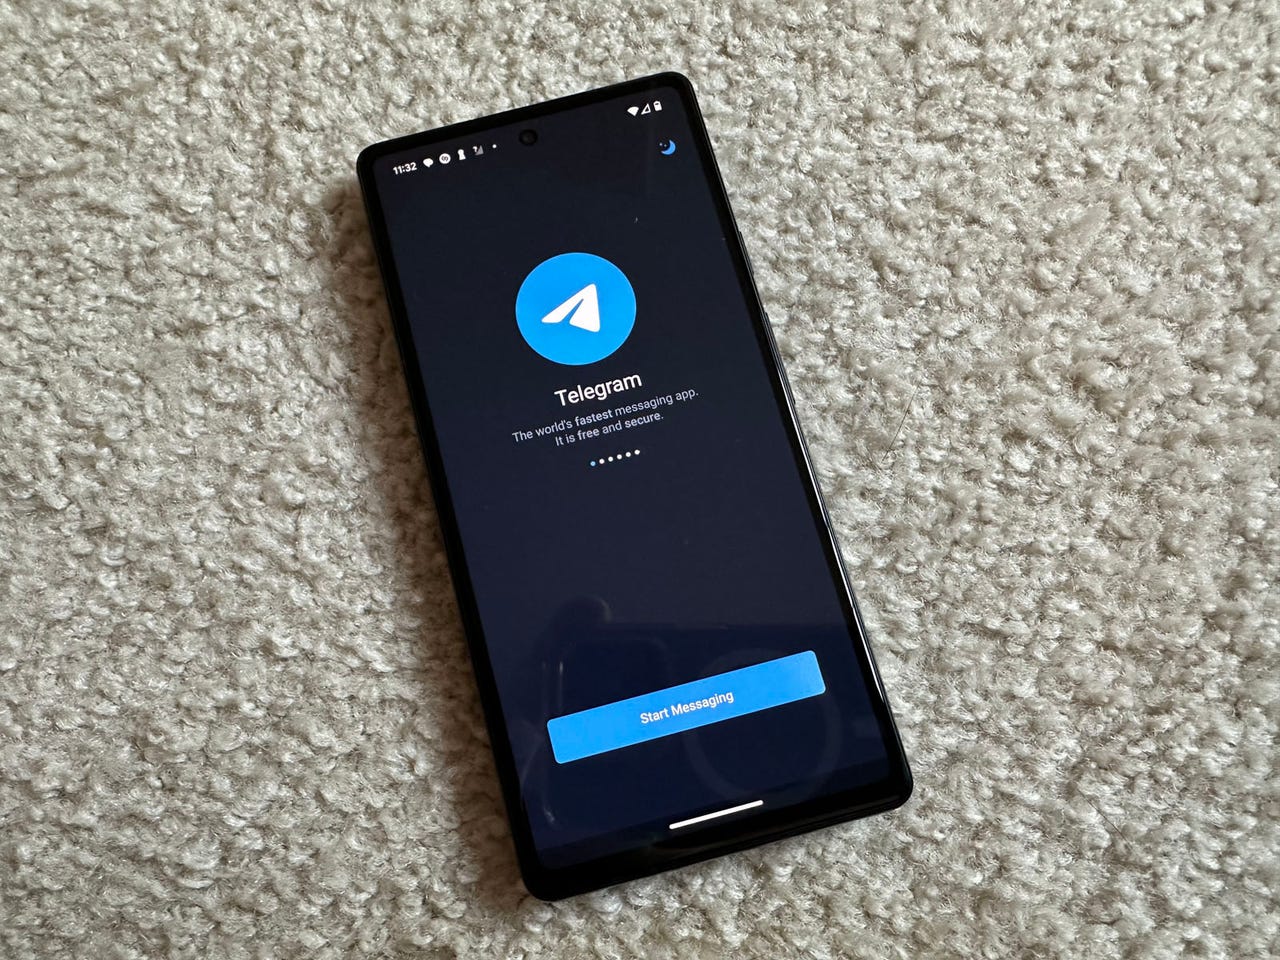 Telegram's messaging app